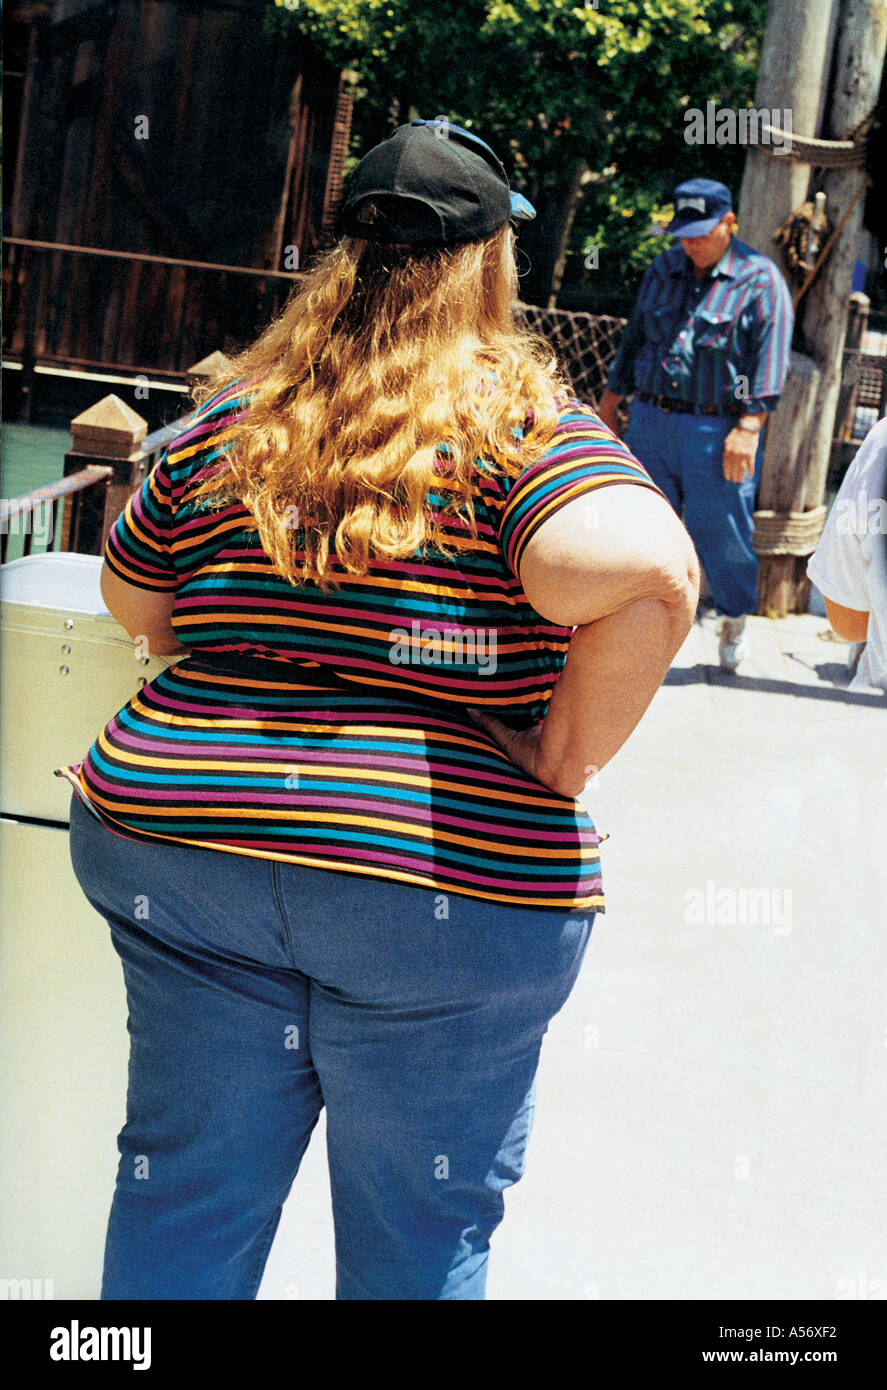 Dicke übergewichtige lustige Frau Frauen in Jeans Times Square New York New York NY NY USA Vereinigte Staaten von Amerika amerikanische Americana 1999 Stockfoto